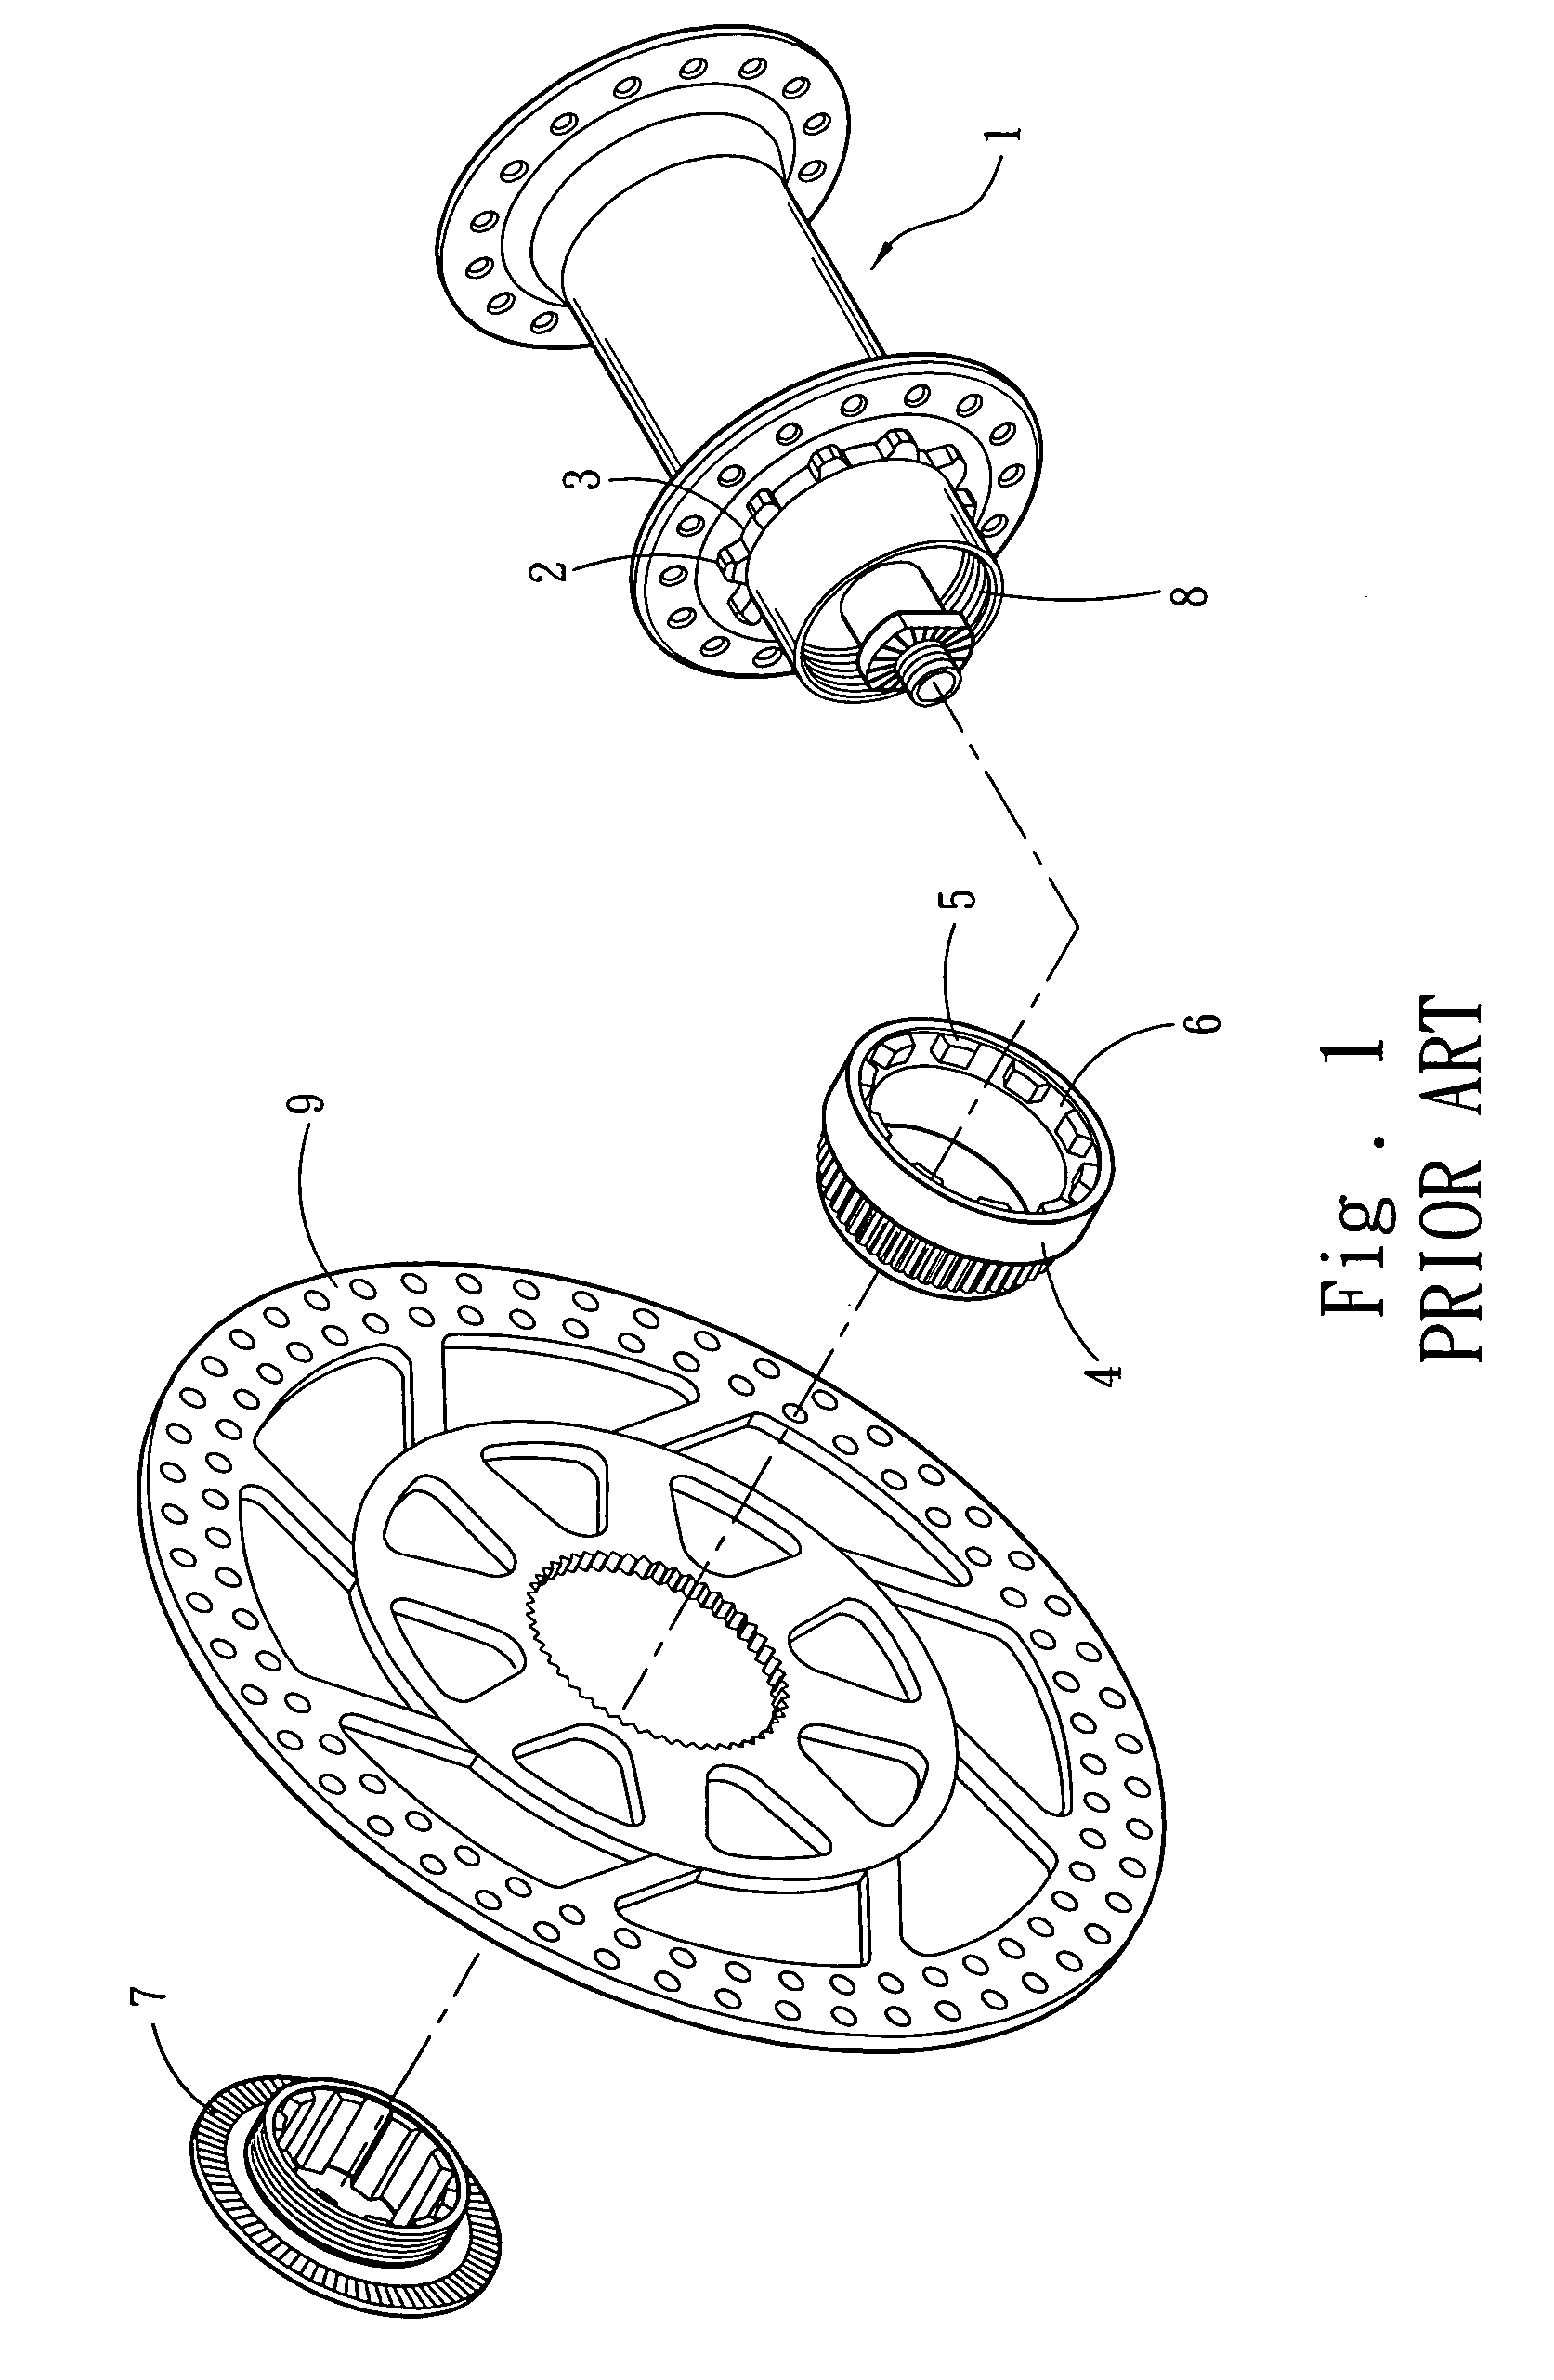 Disc brake hub adapter structure